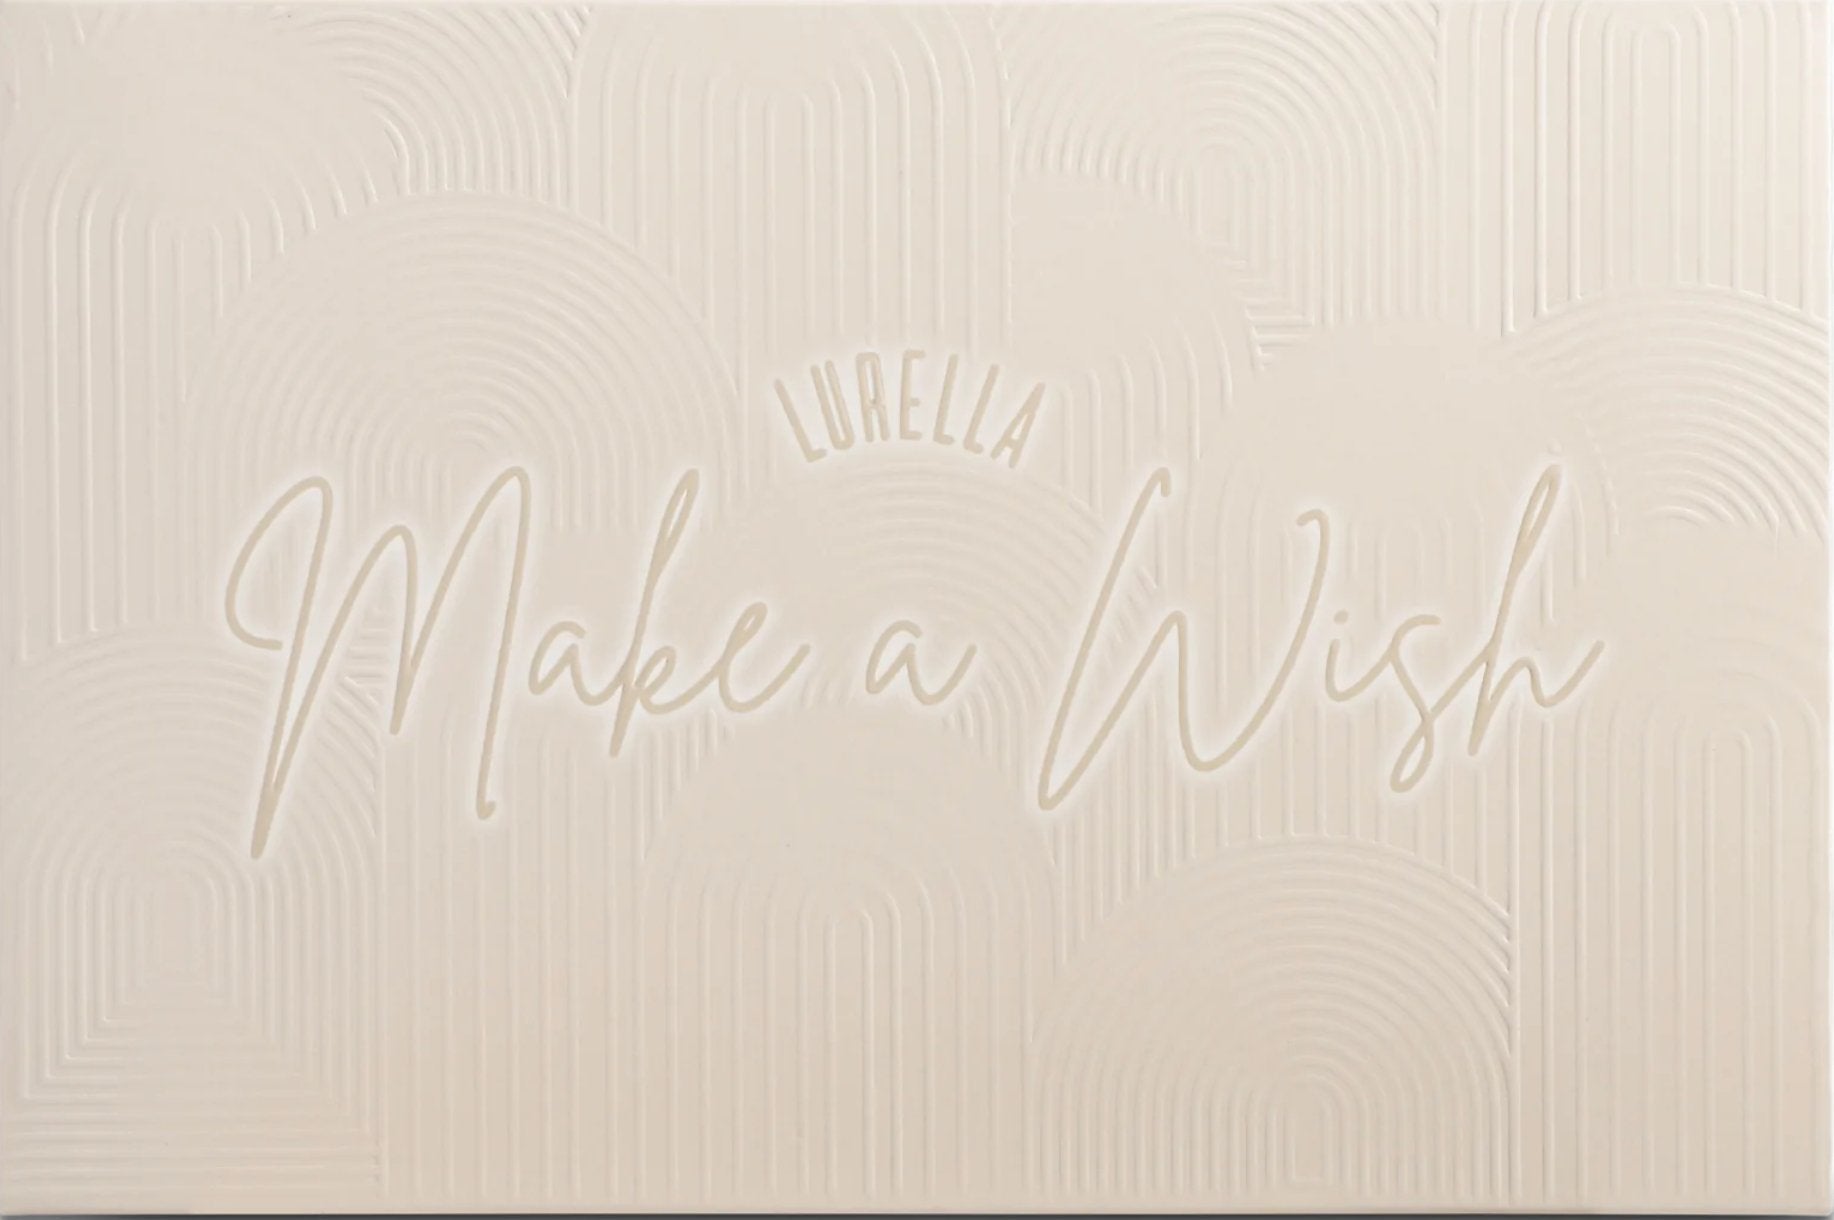 Make A Wish - DaizyKat Cosmetics Make A Wish Lurella Cosmetics Eyeshadow Palette